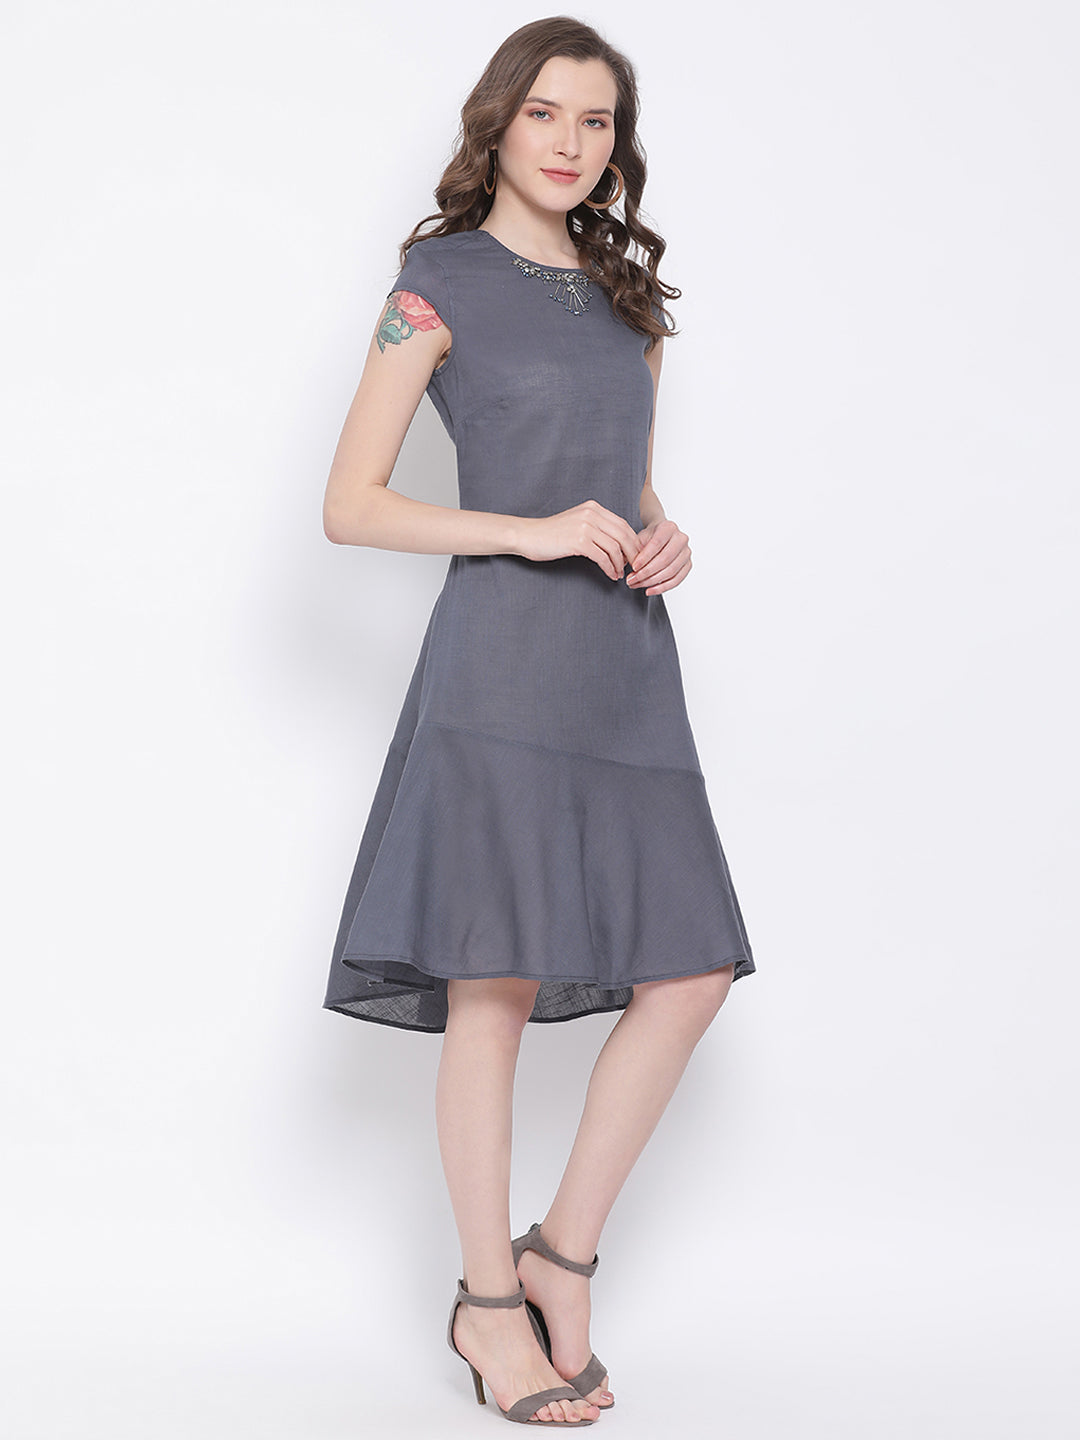 LY2 Dark Grey Short Sleeve High Low Short Dress